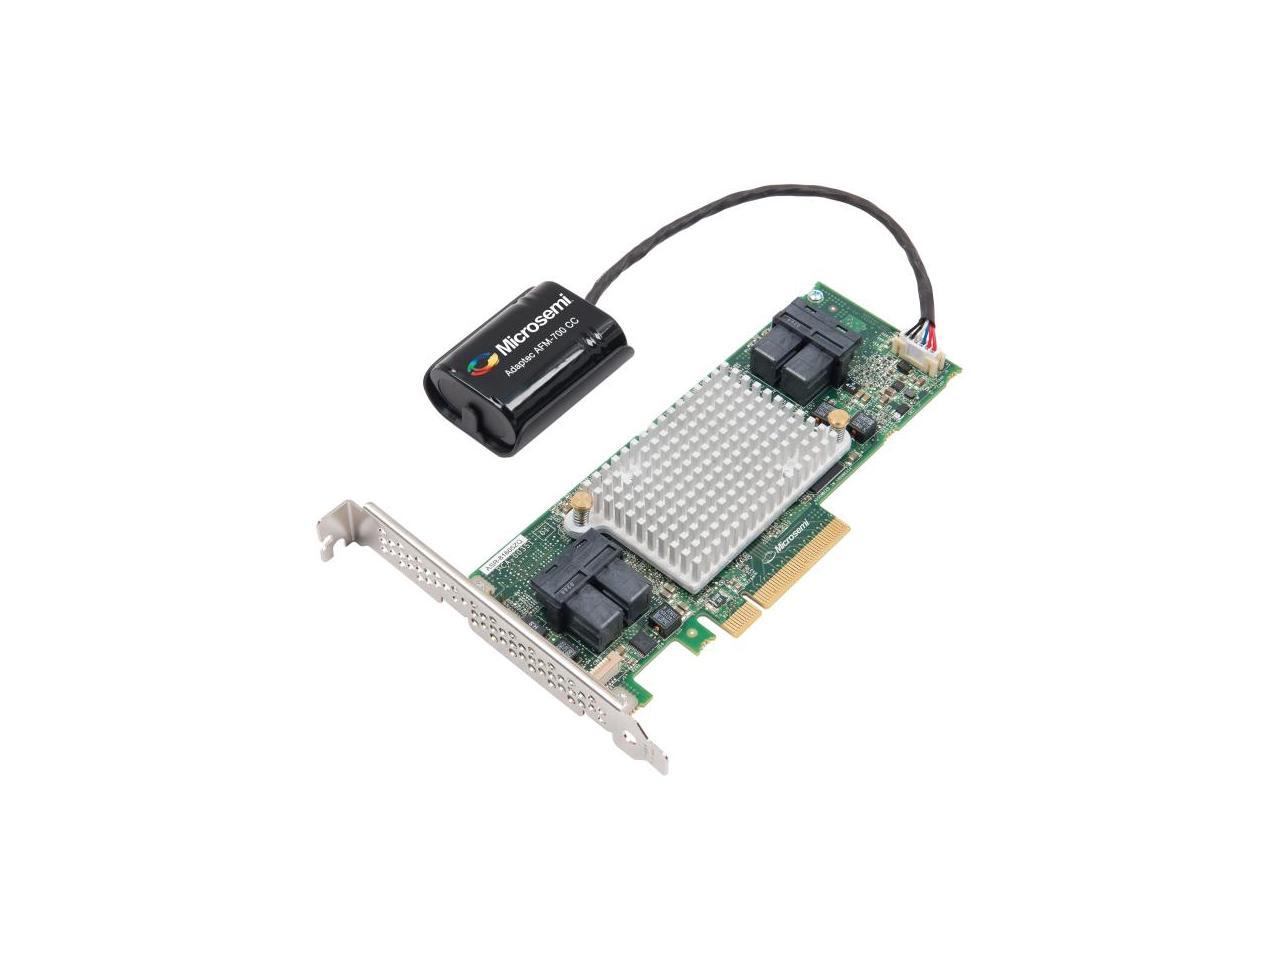 Plug-In Card Microsemi Storage Controller Low Profile Components 2287101-R